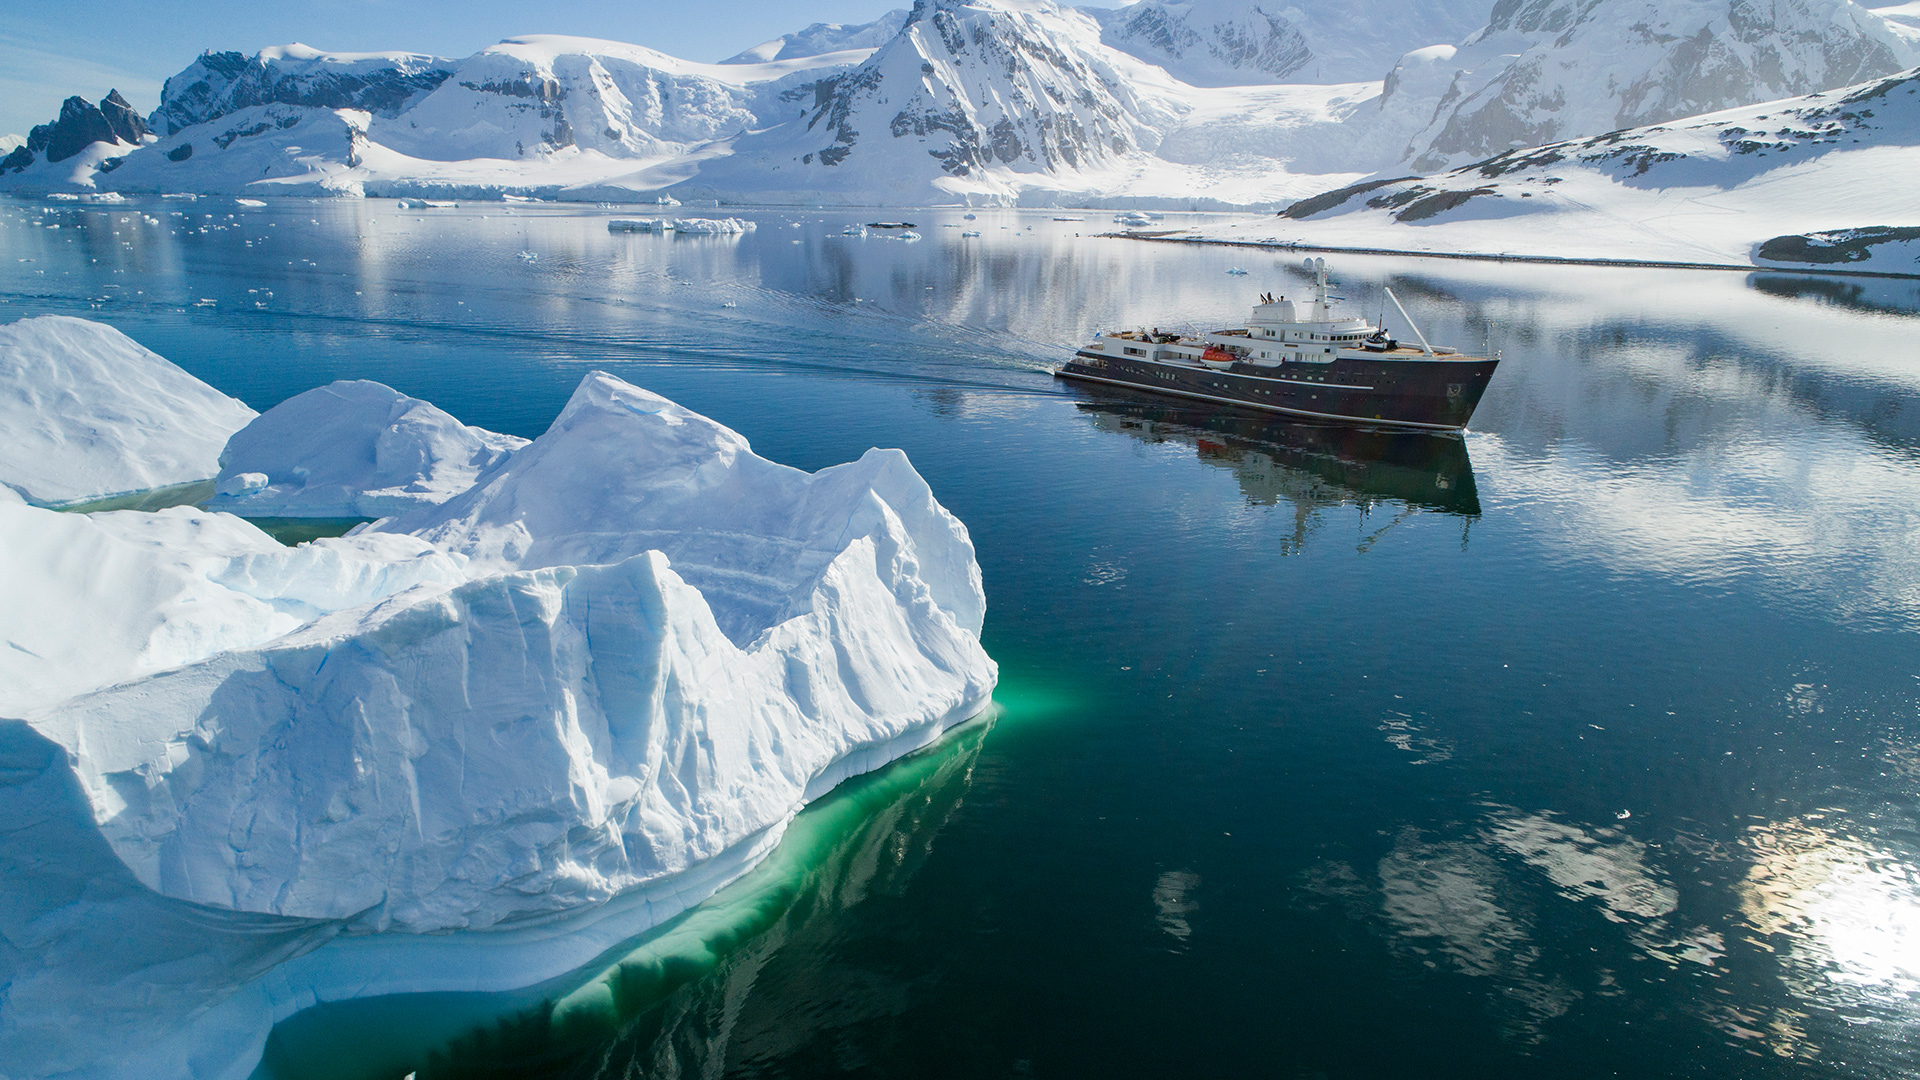 EYOS Announces Fixed Date, Single Cabin Antarctica Departures on Legend in December 2019